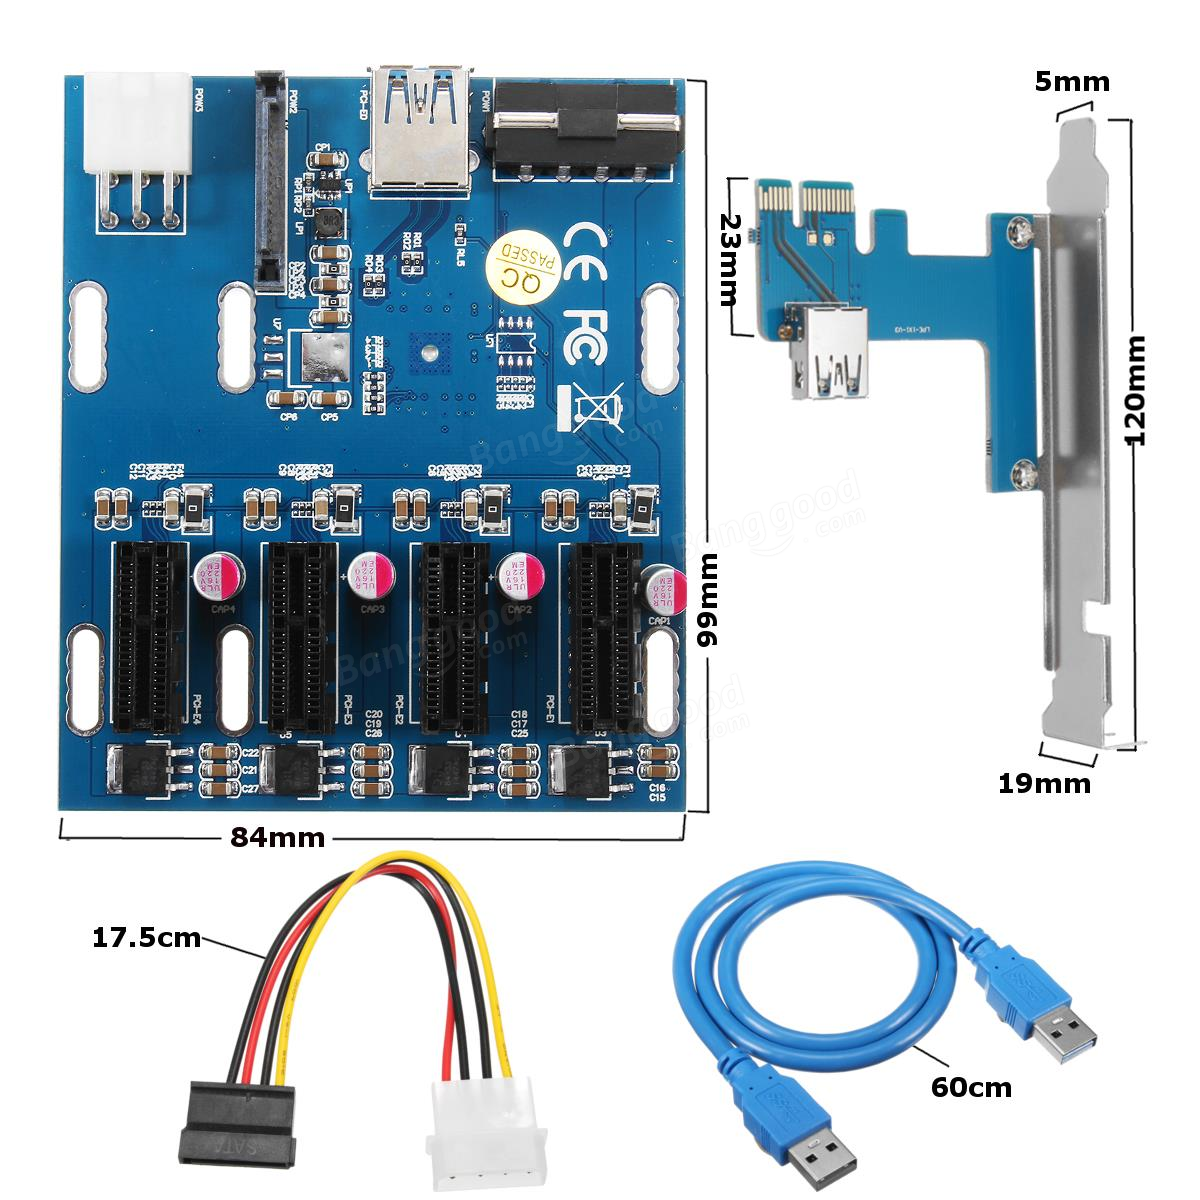 Слот pci e x1. MYPADS PCI-E x1 Hub USB 3.0. Райзер PCI-E x1 схема. 4 Портовый коммутатор PCI-E. Райзер для звуковой карты PCI-E x1.